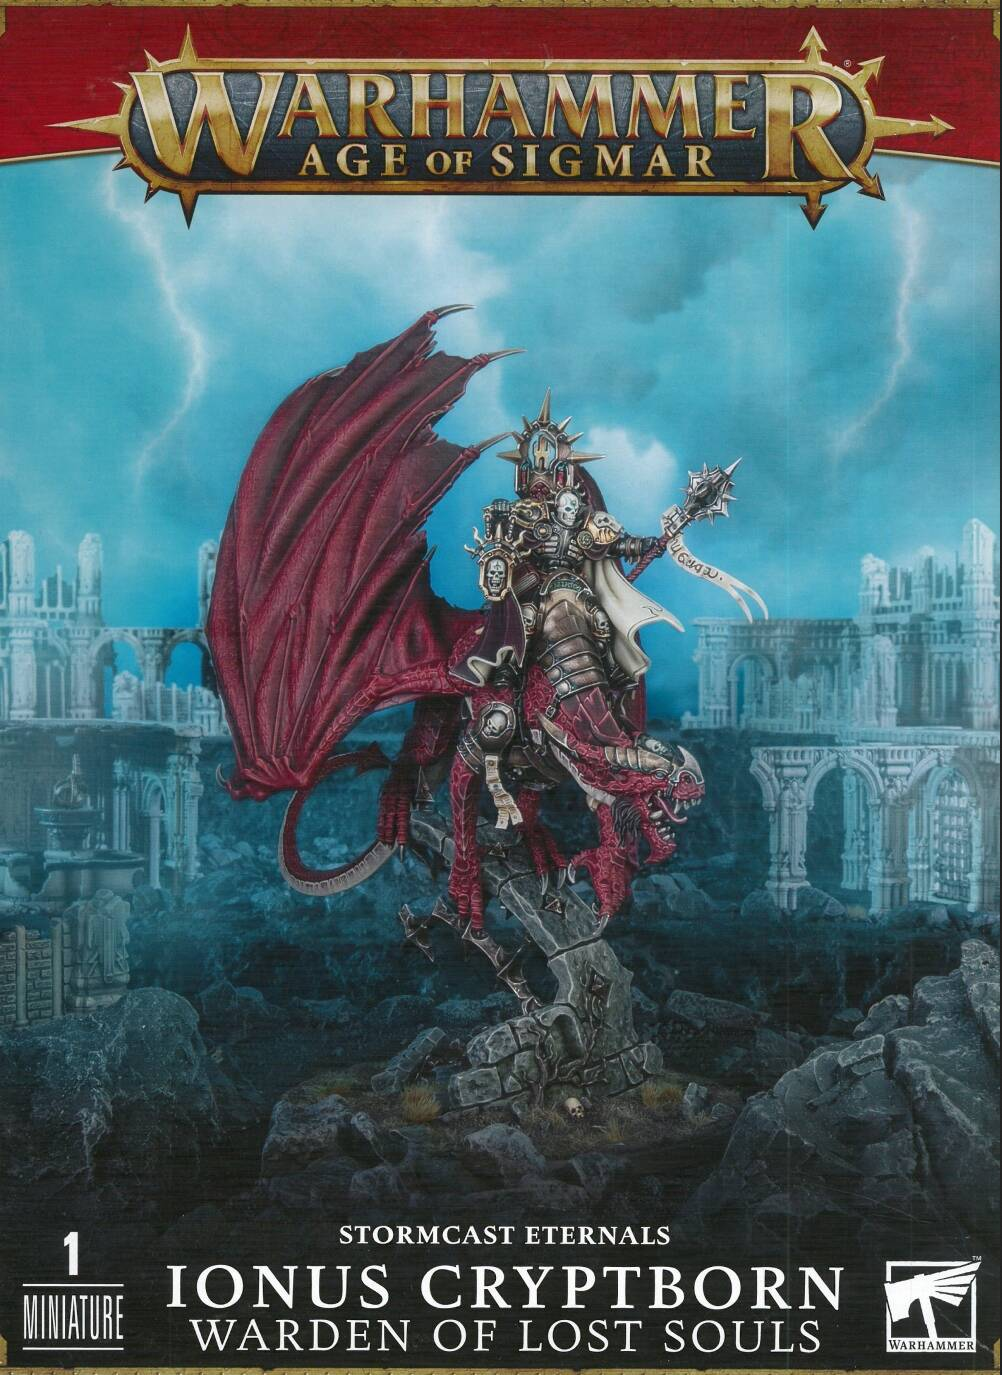 Ionus Cryptborn Warden of Lost Souls - Stormcast Eternals - WARHAMMER AGE OF SIGMAR / CITADEL